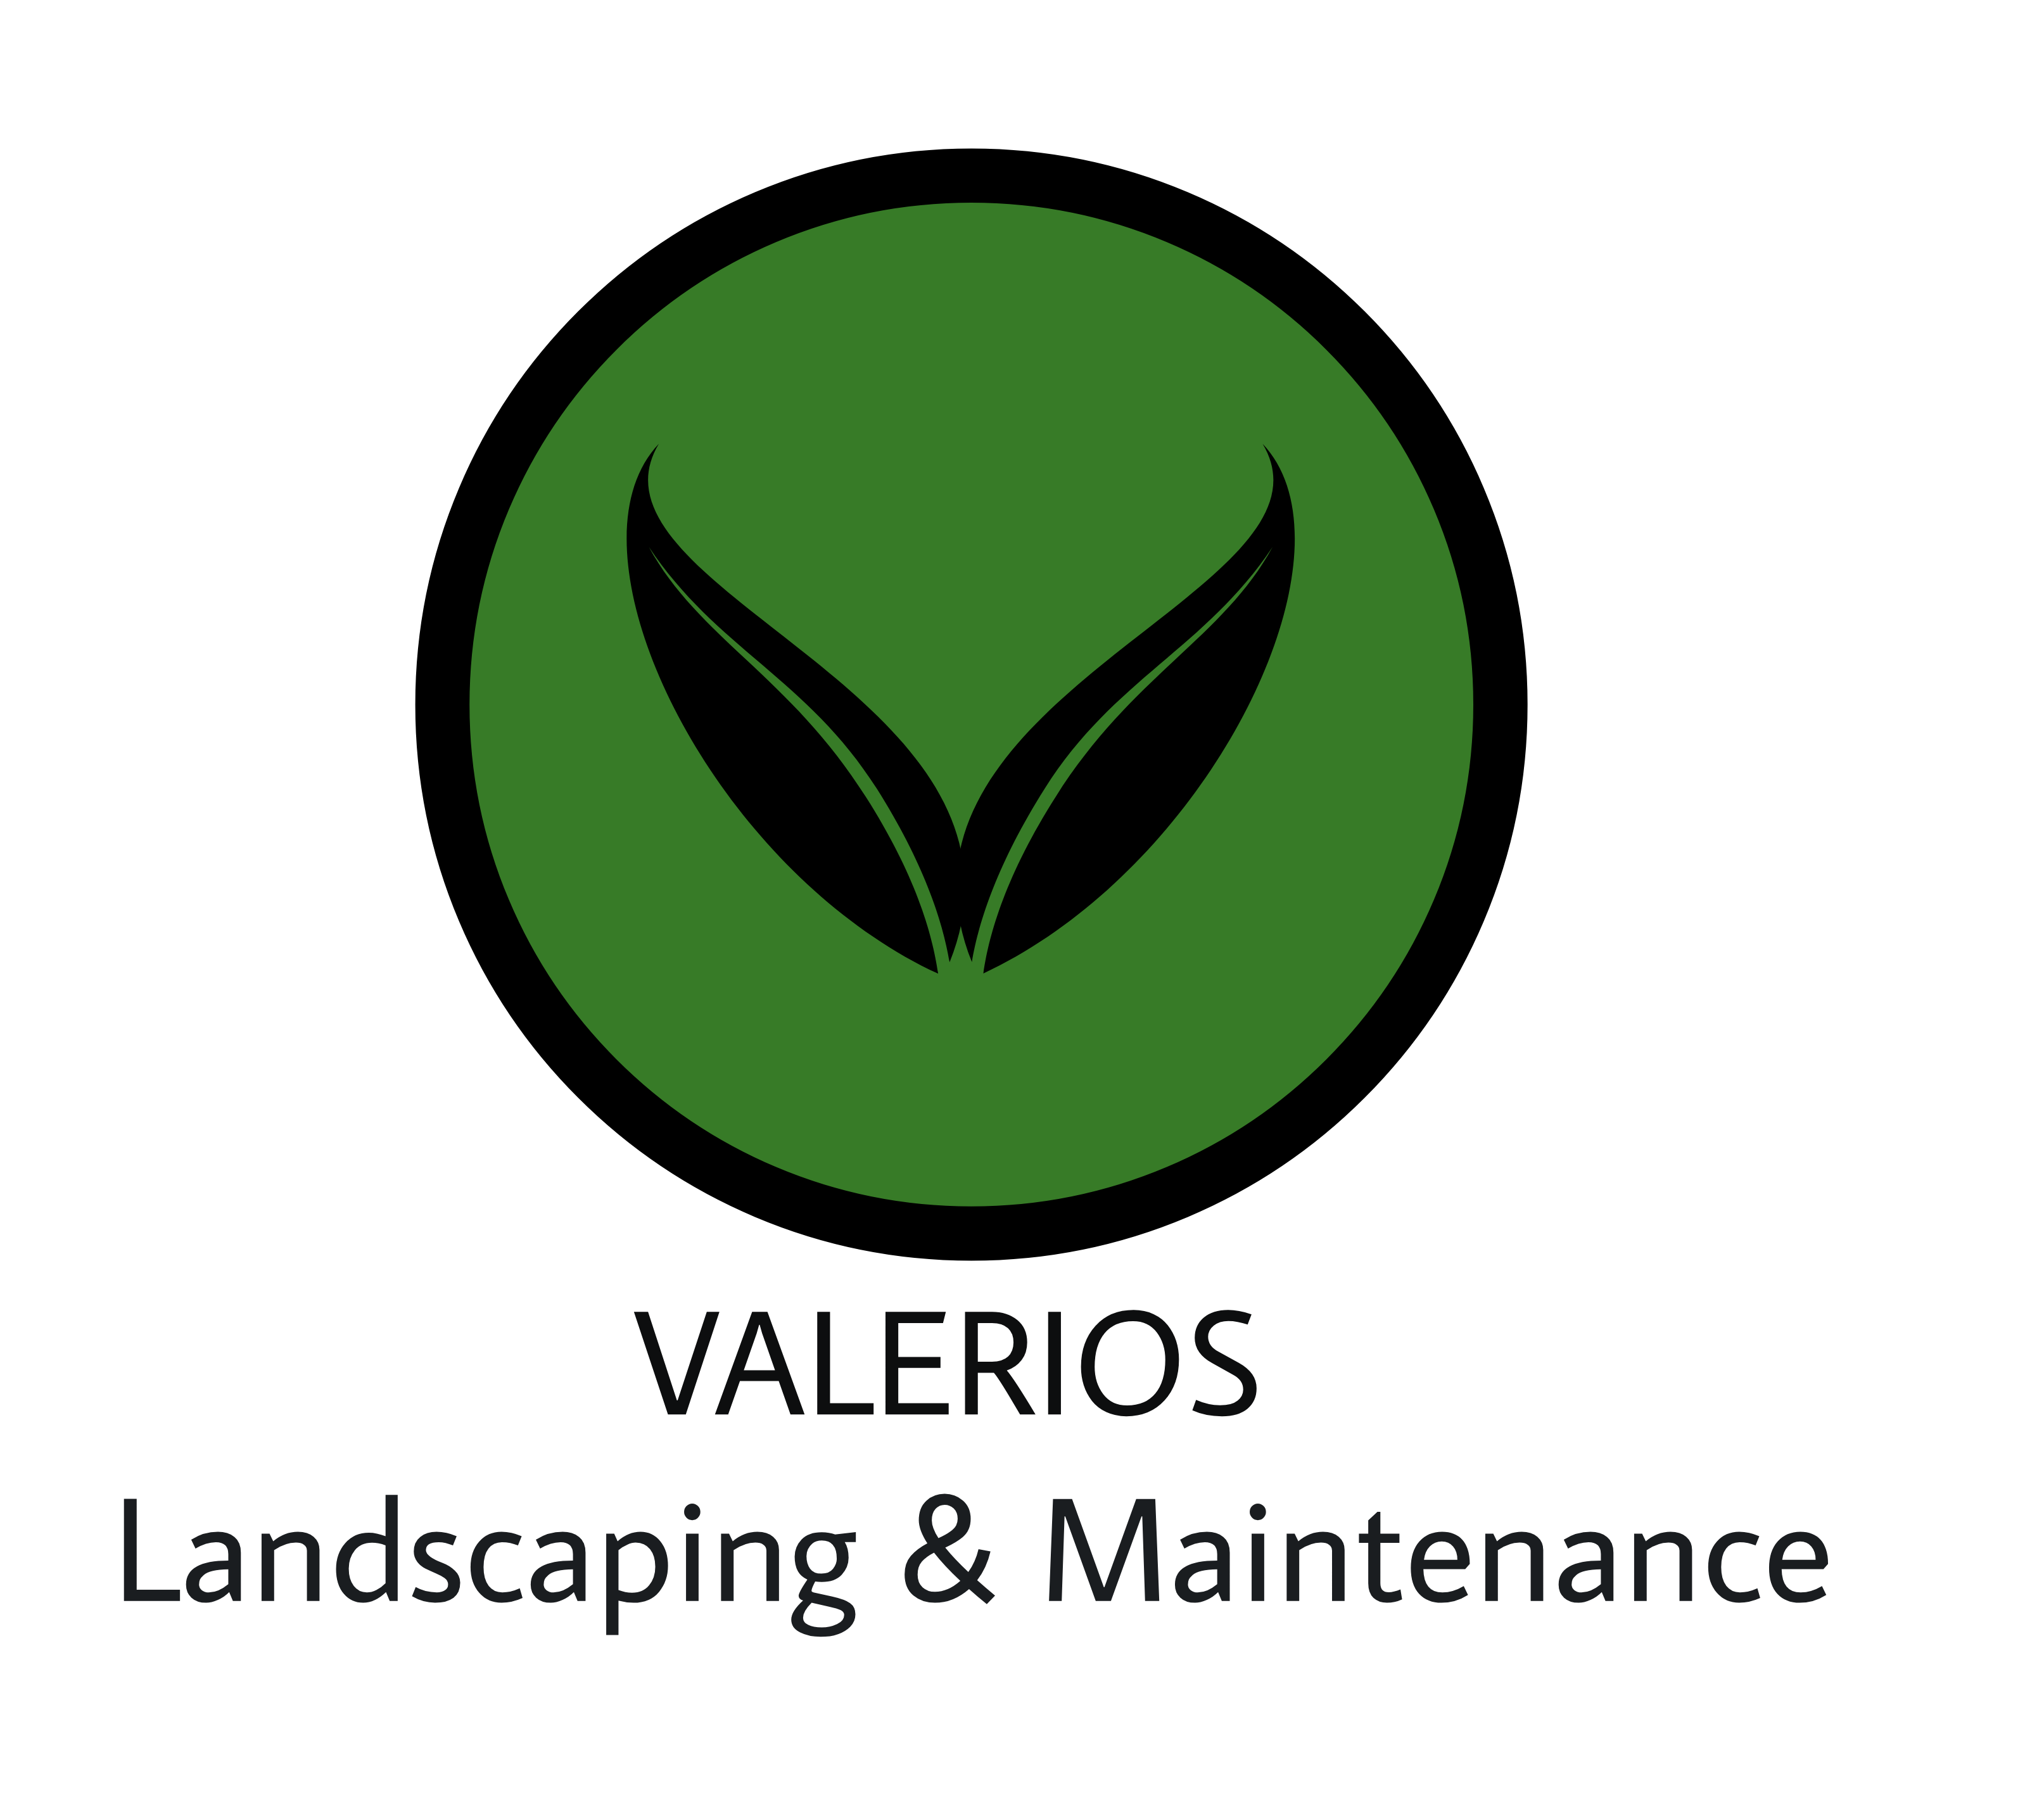 Valerios Landscaping Maintenance Logo